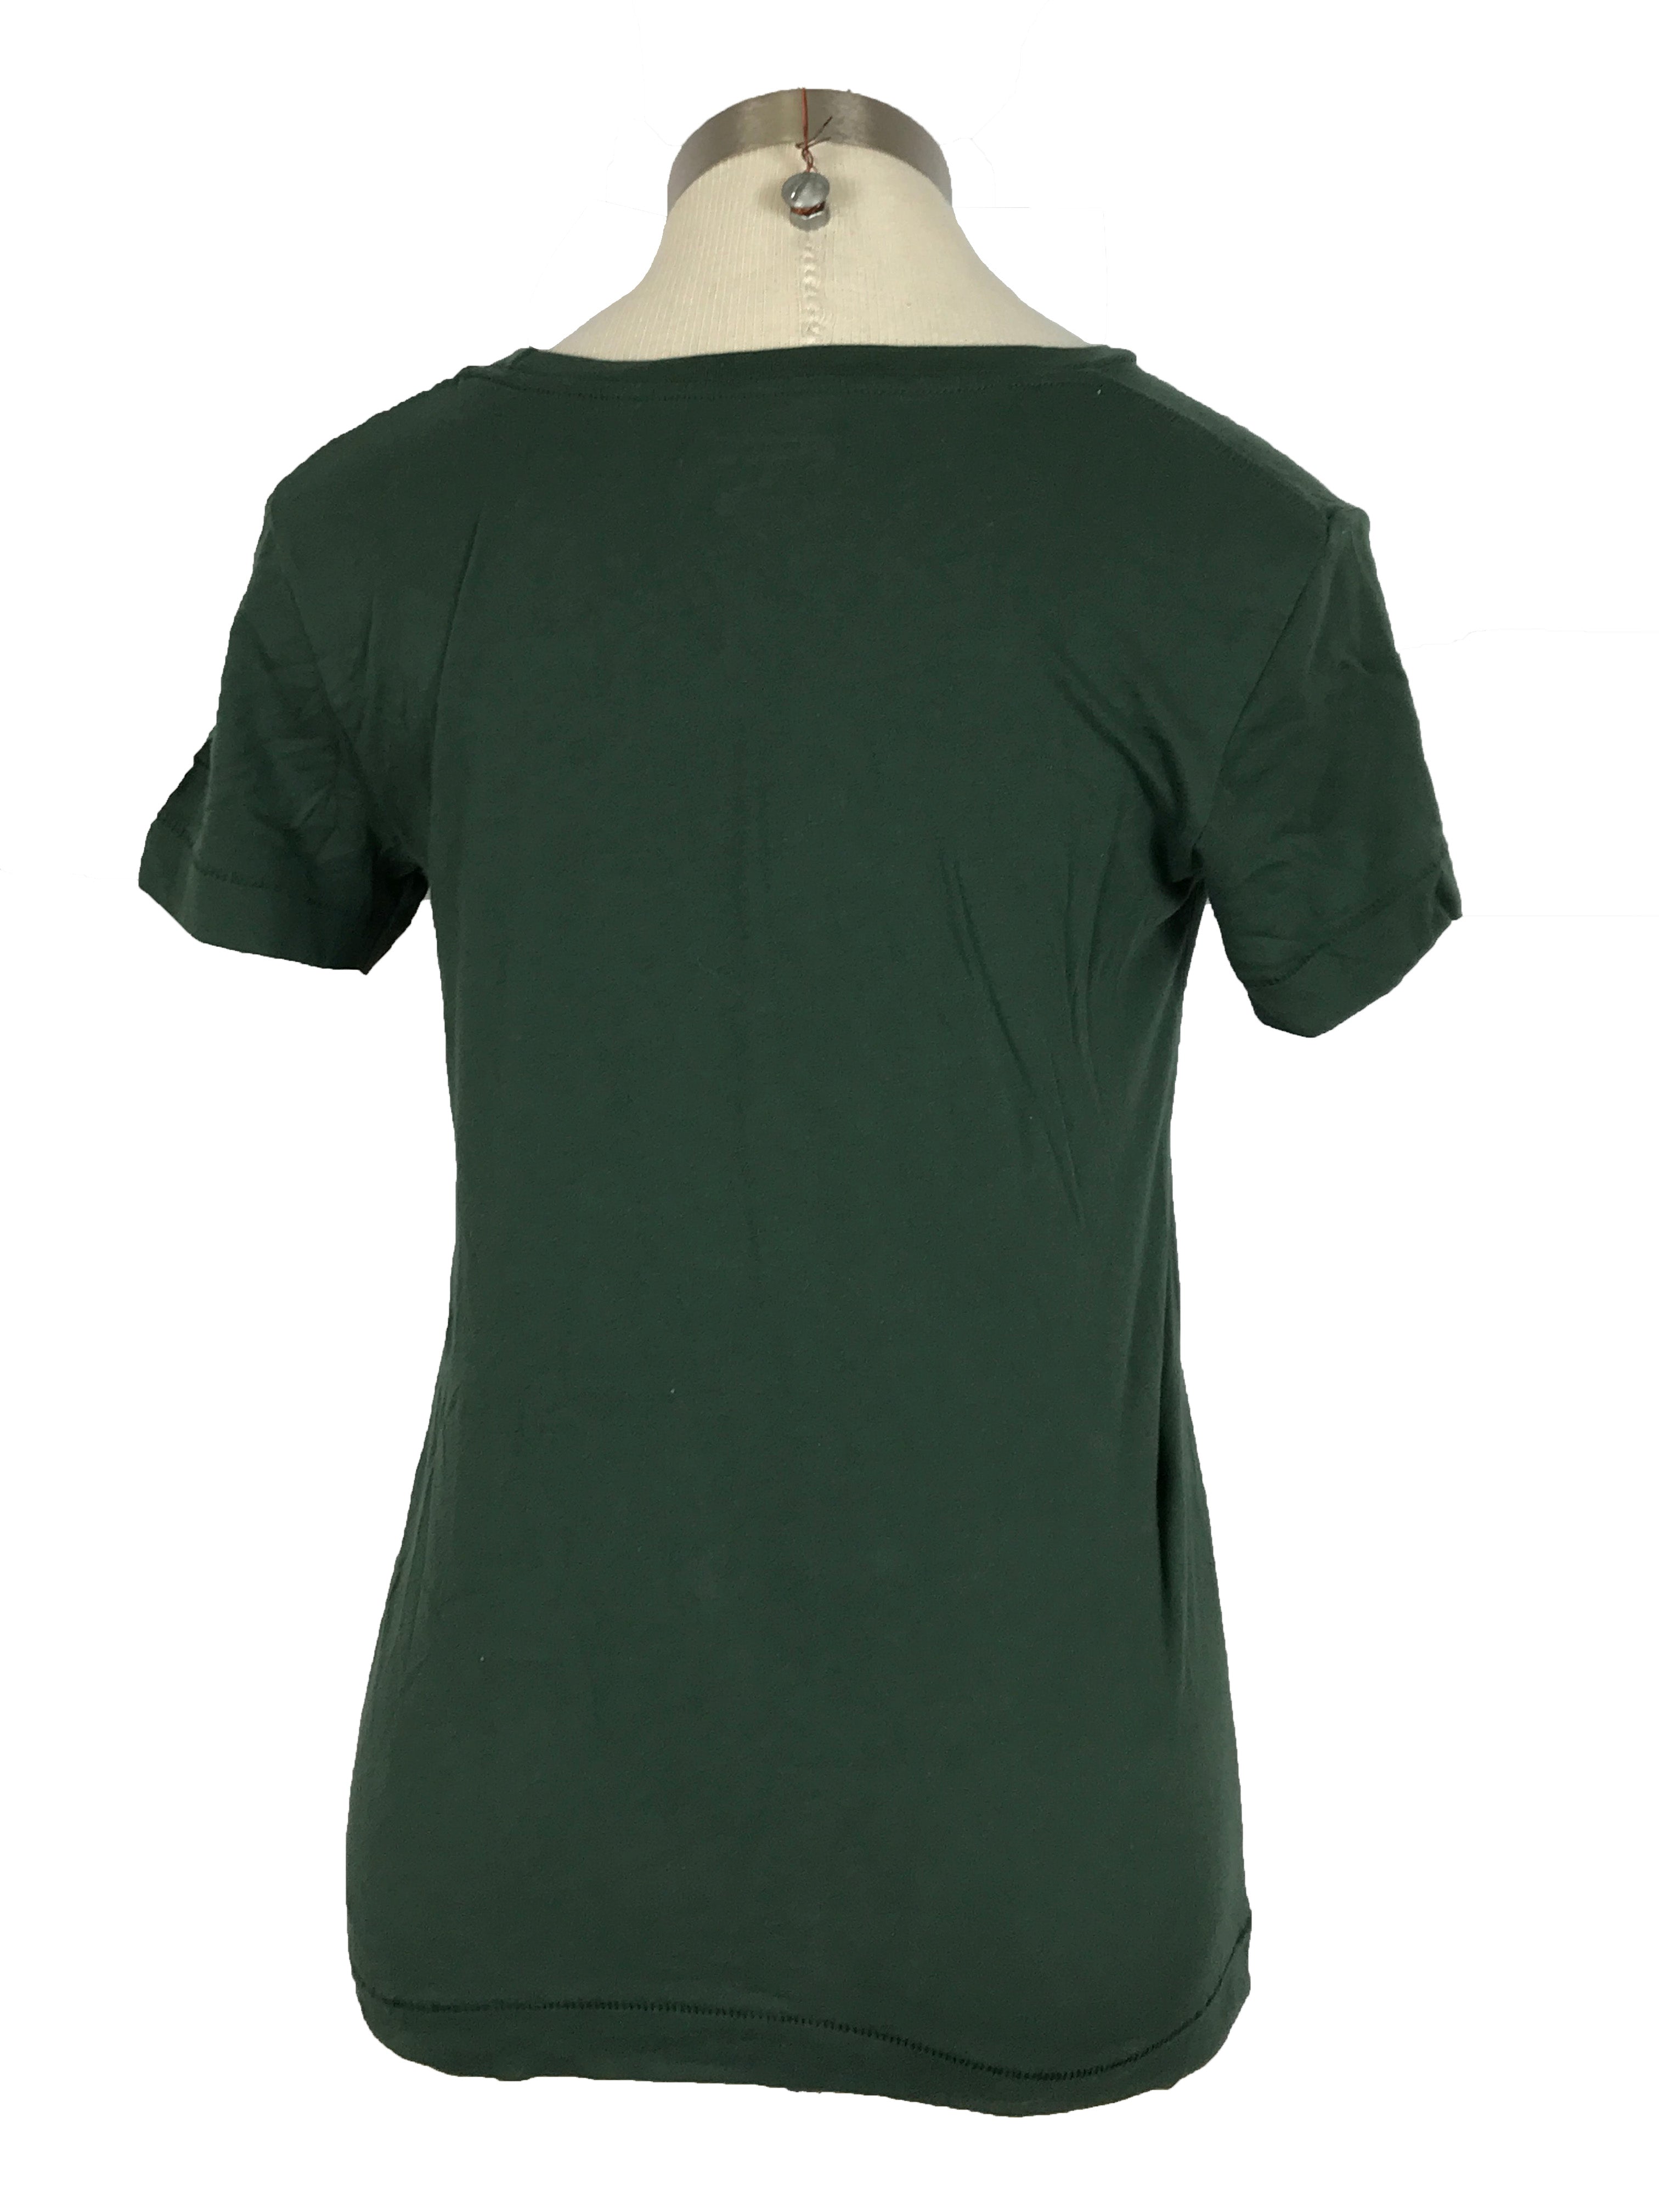 Champion MSU Green T-Shirt Women's Size S